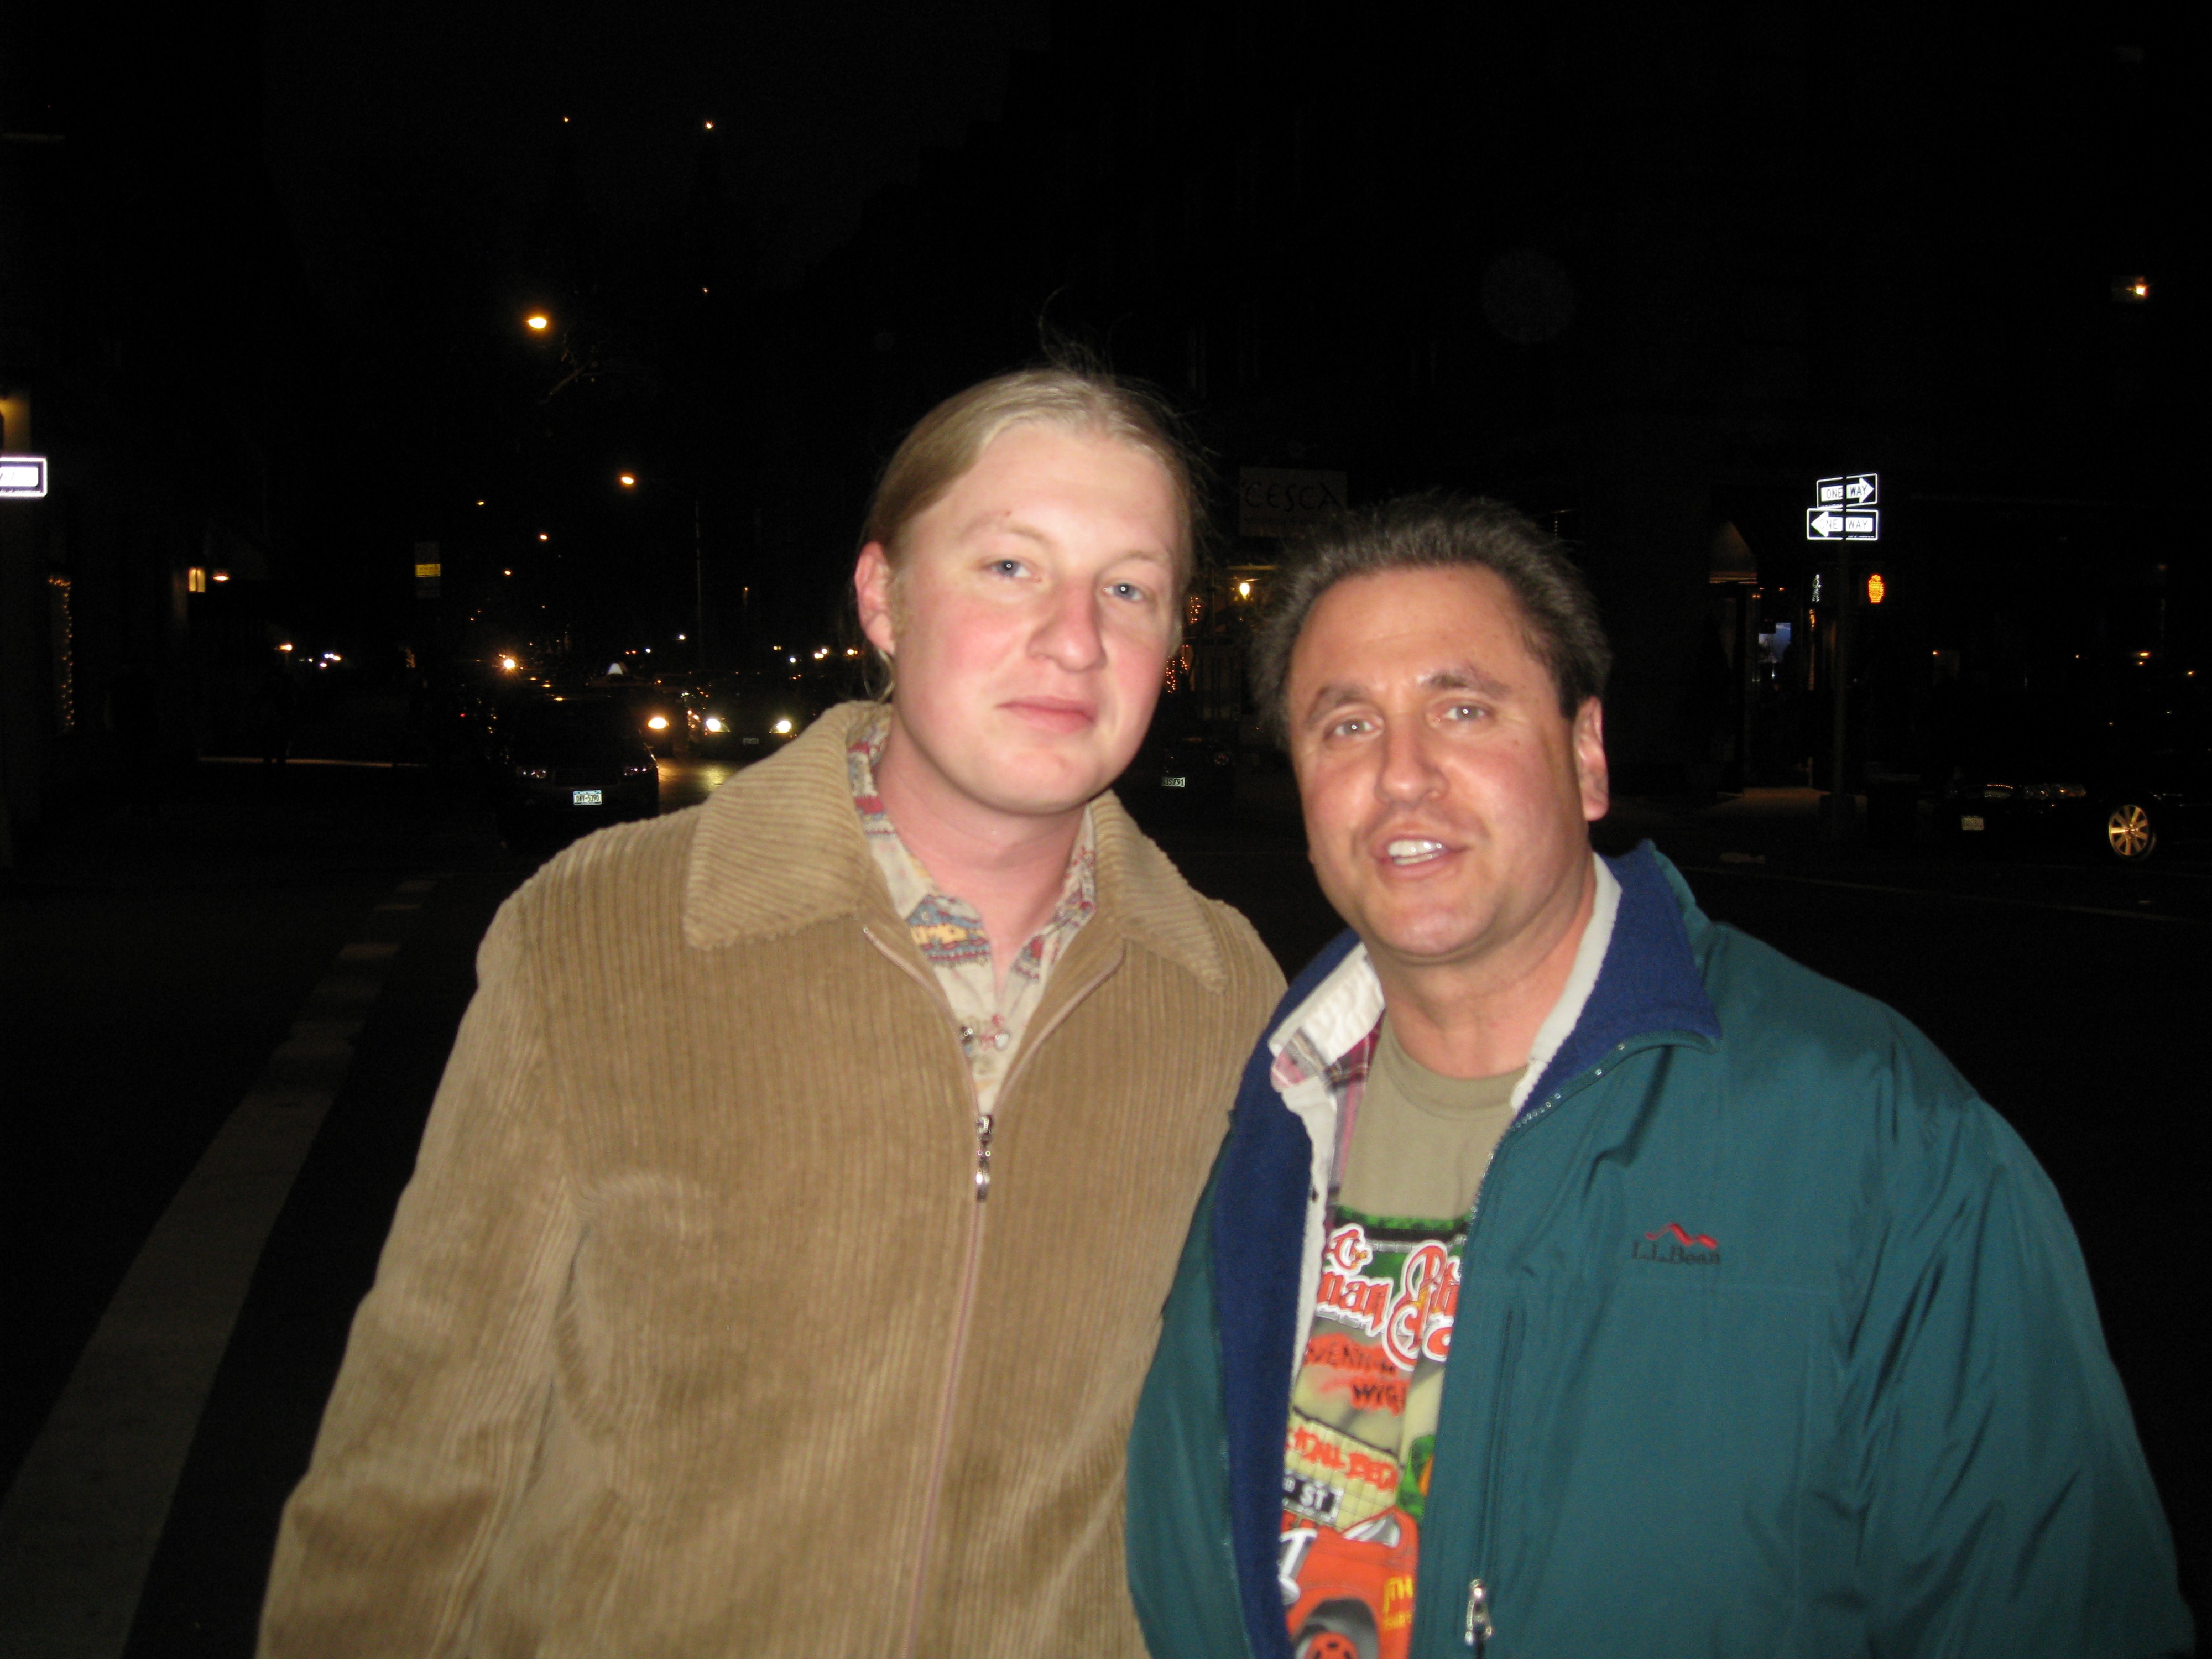 Derek Trucks & Zem, March 17, 2009 before St. Patty's Beacon show, corner of Broadway & 75th St